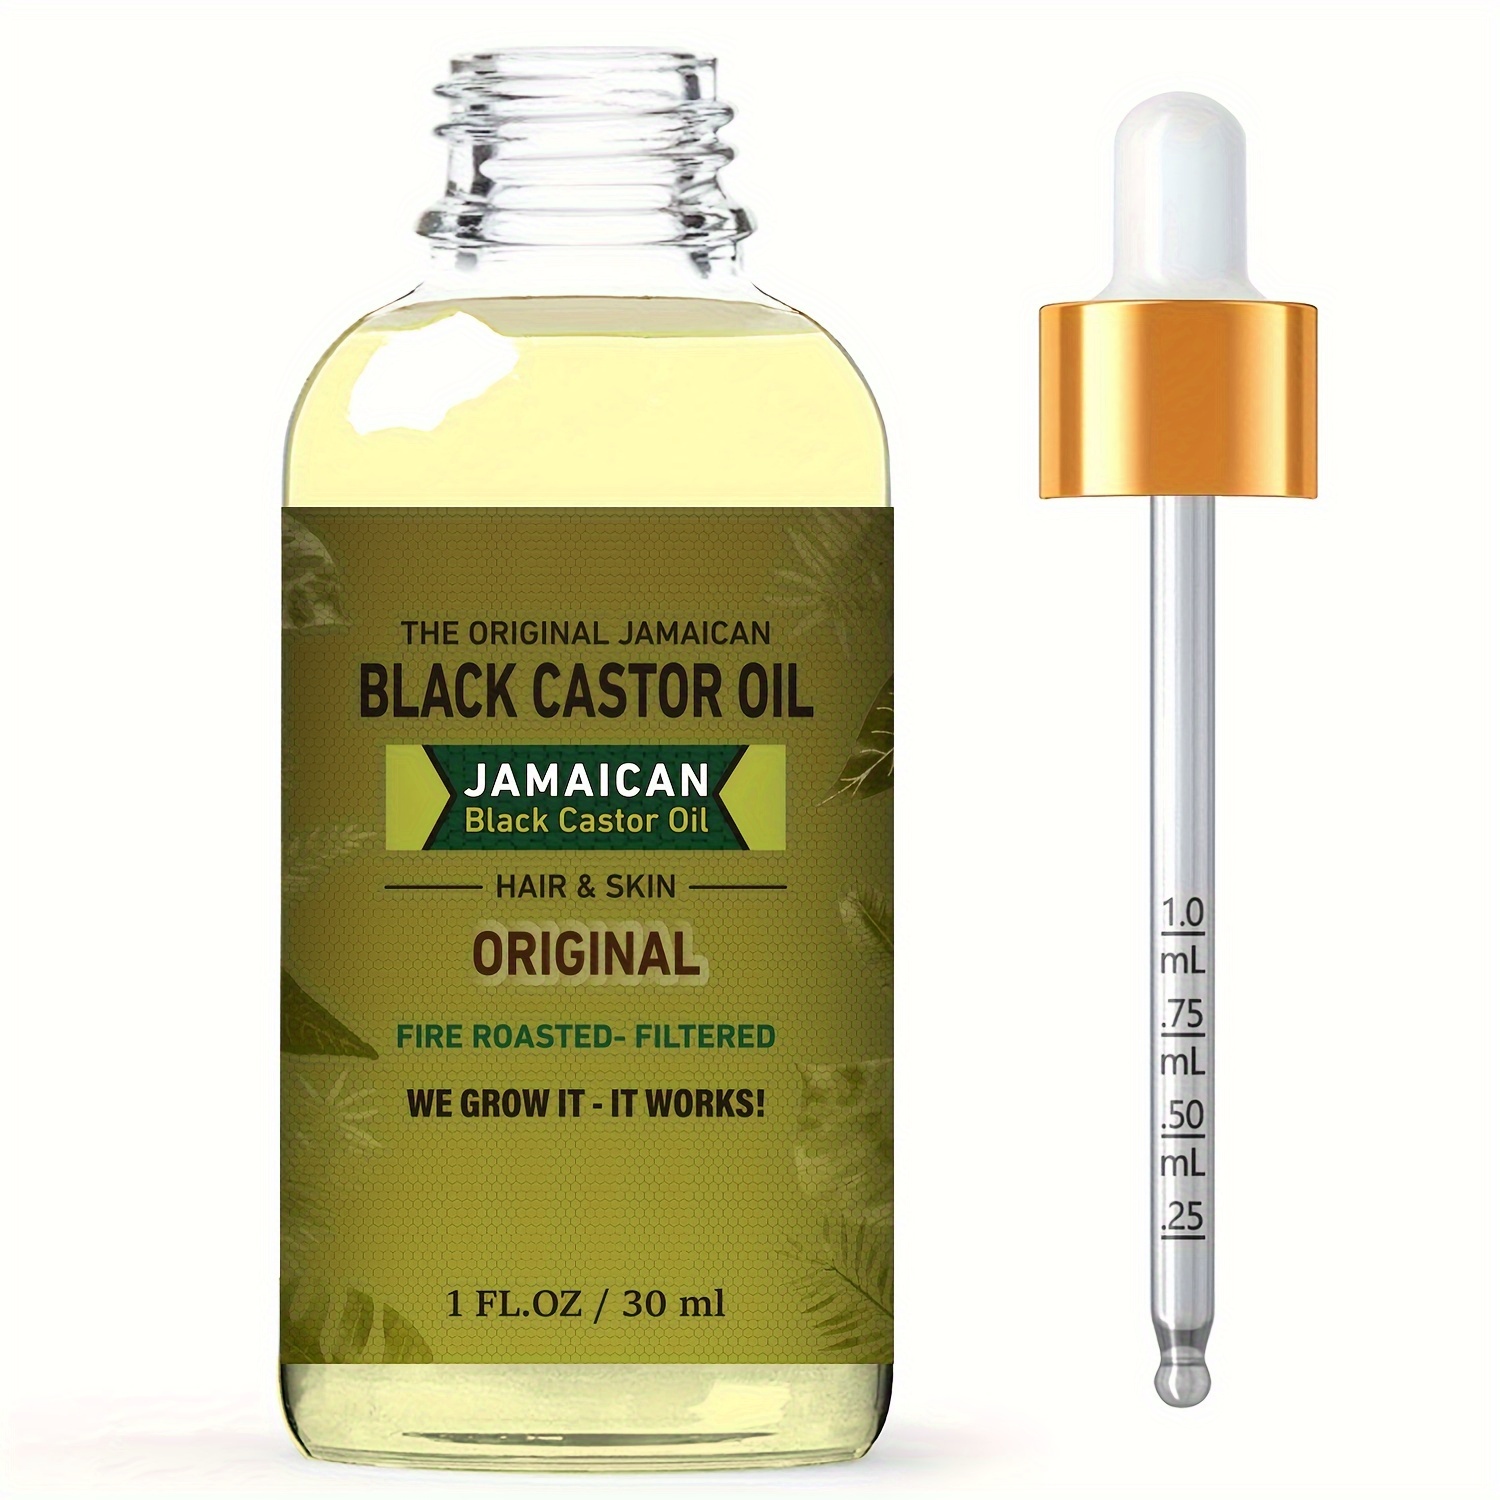 Batana Oil For Hair Care Hair Serum With Jamaican Black - Temu